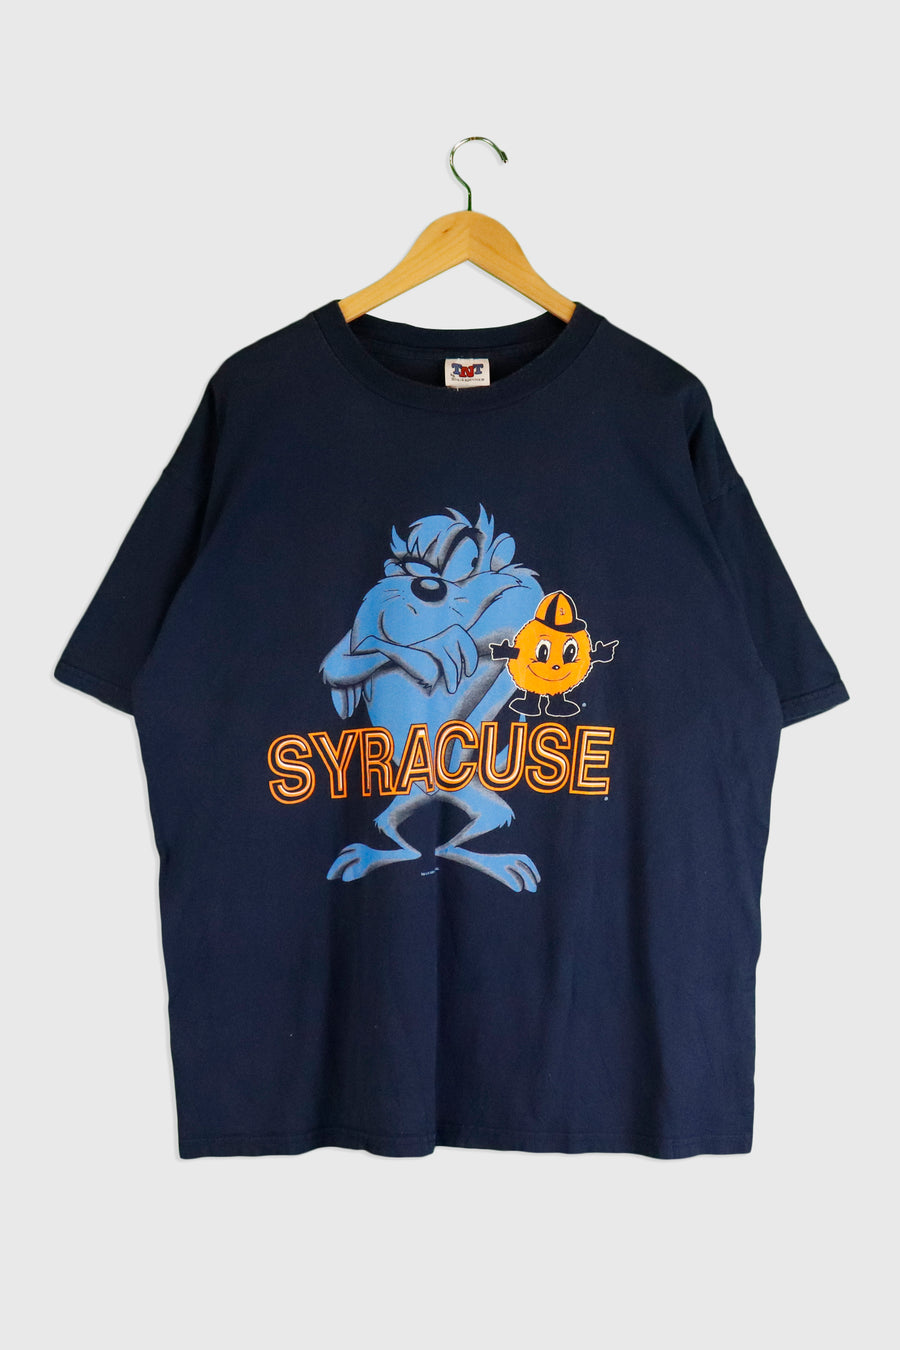 Vintage 1993 Warner Bros. Syracuse Tasmanian Devil T Shirt Sz XL